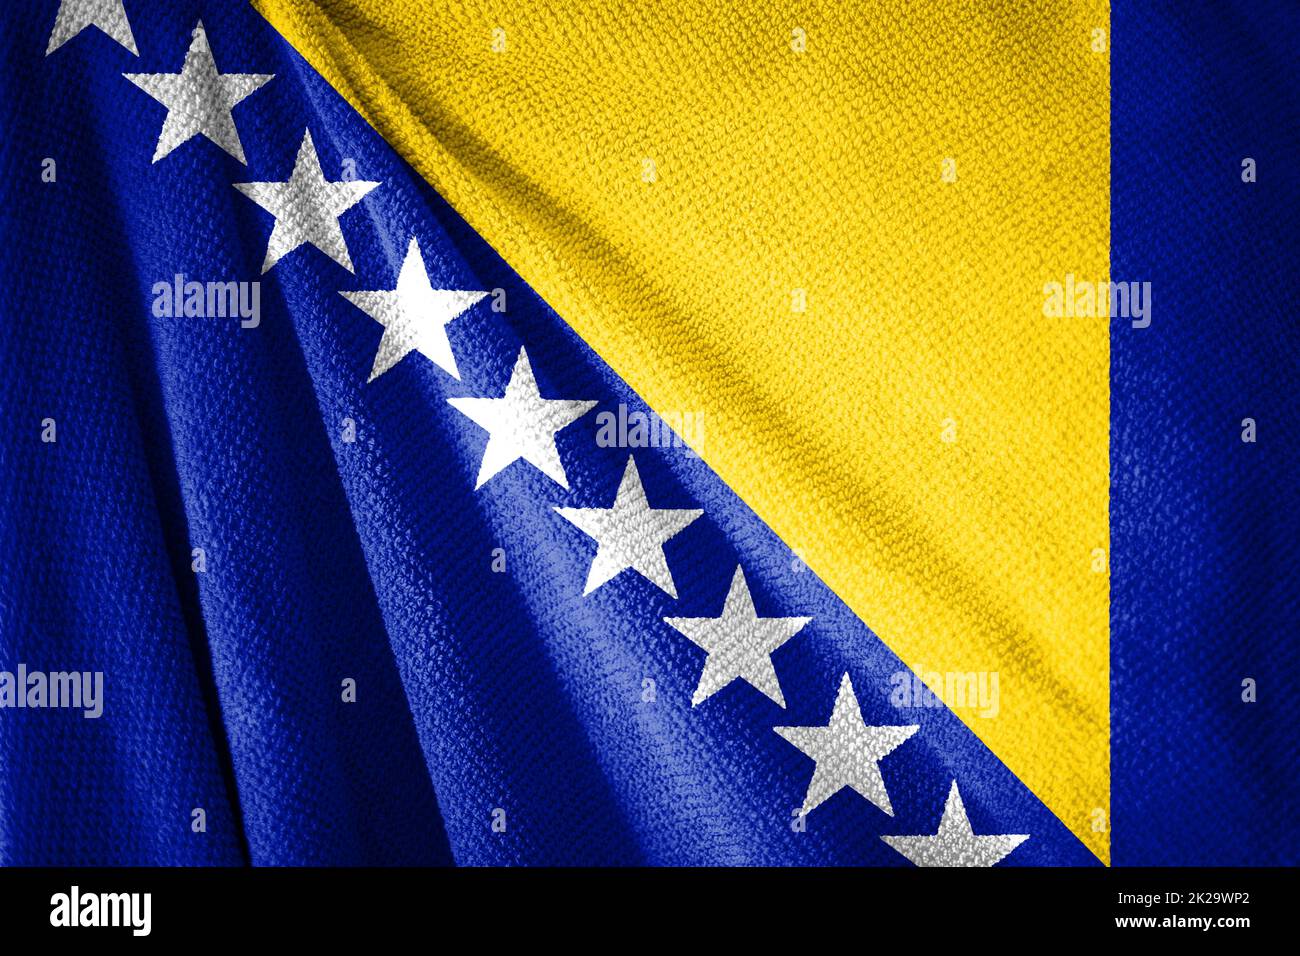 Bosnia and Herzegovina flag on towel surface illustration with Stock Photo